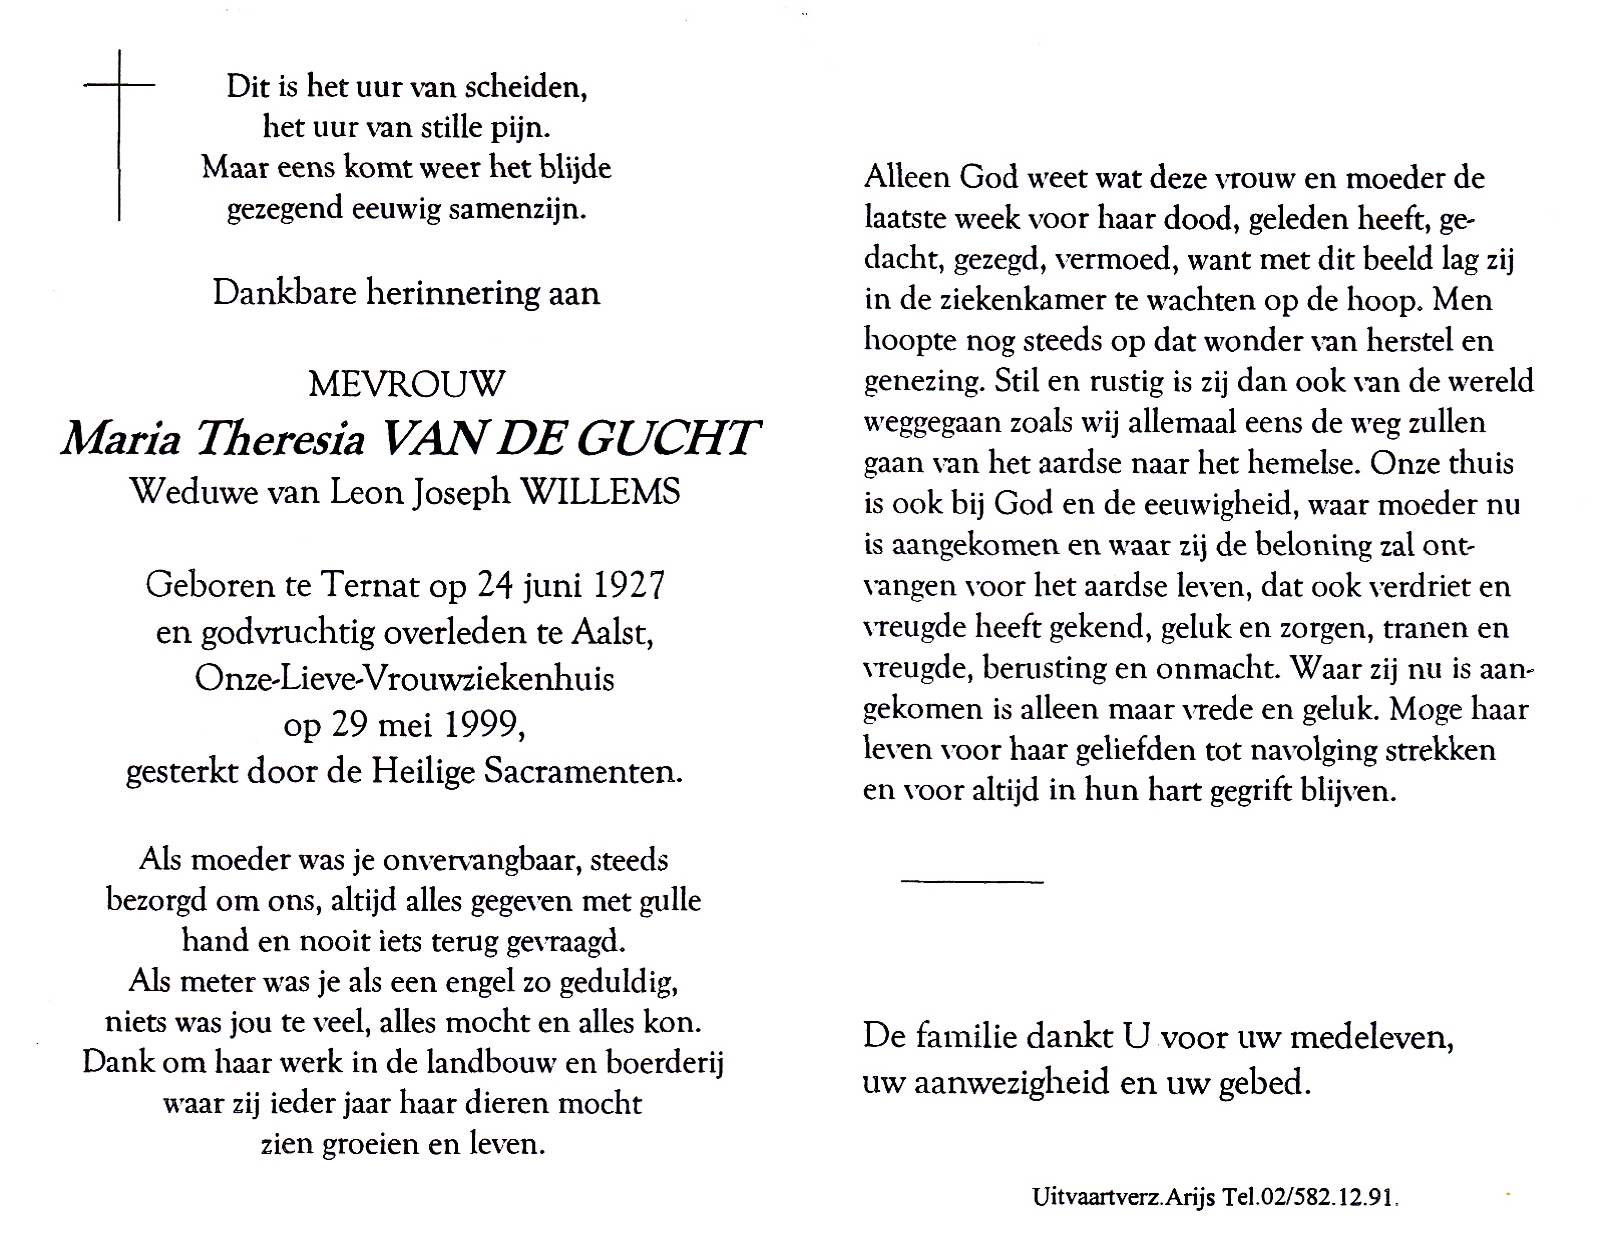 Van de Gucht Maria Theresia